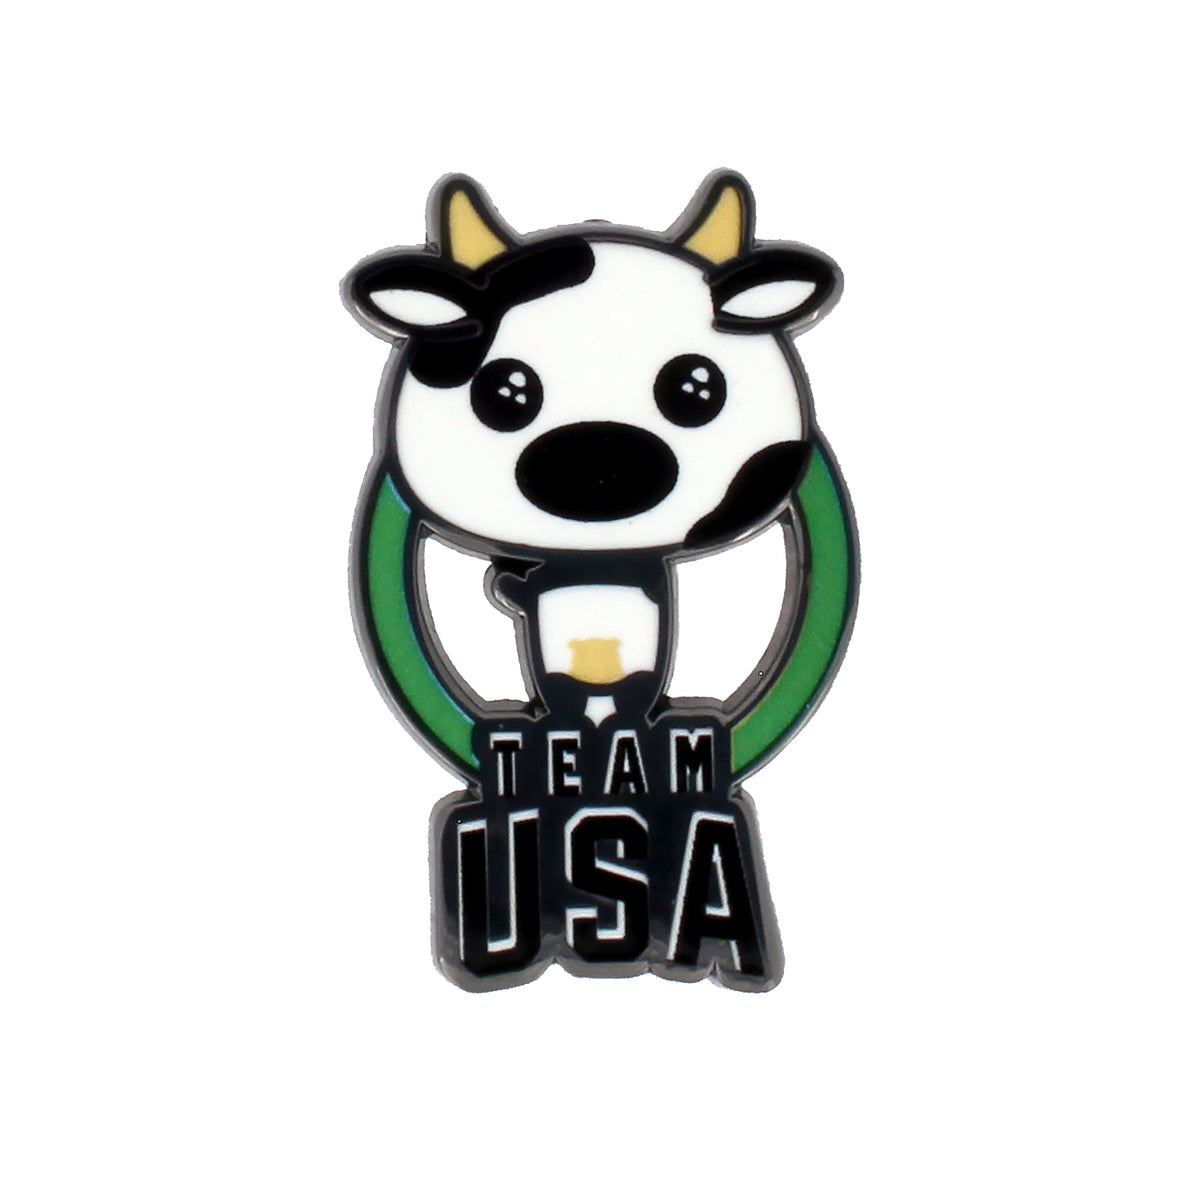 2020 Summer Olympics USOC Team USA Cute Pop Culture Bird Lapel Pin Offically Licensed On Backer Card 